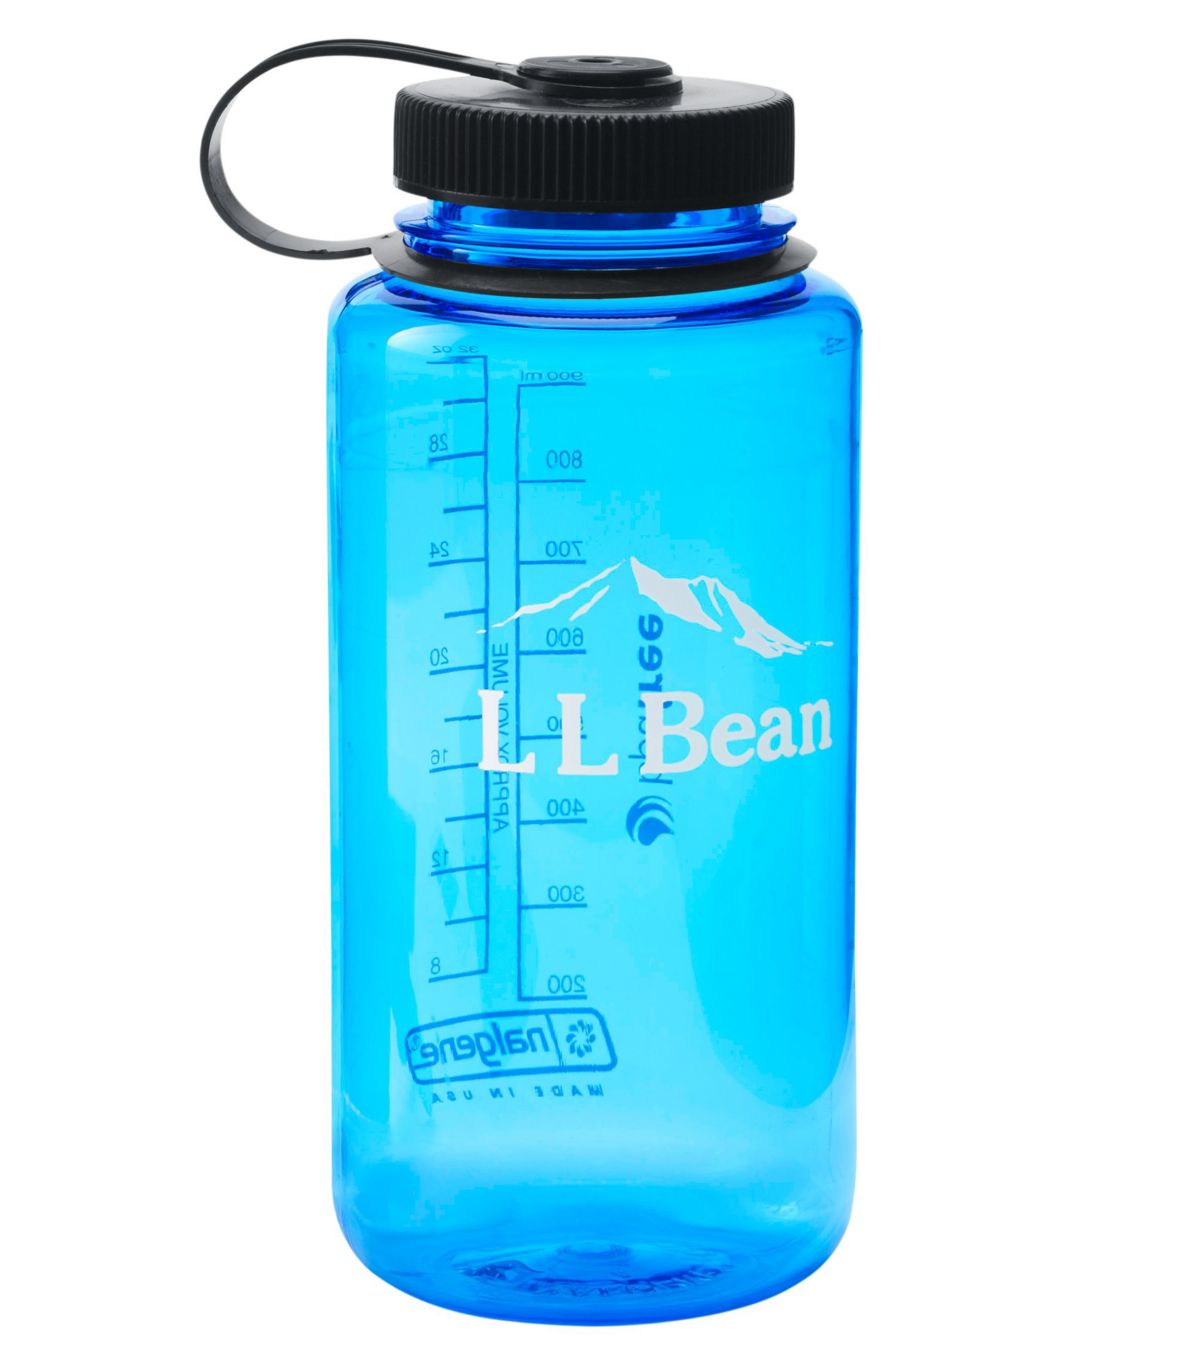 Nalgene Sustain Wide Mouth Water Bottle with L.L.Bean Logo, 32 oz.